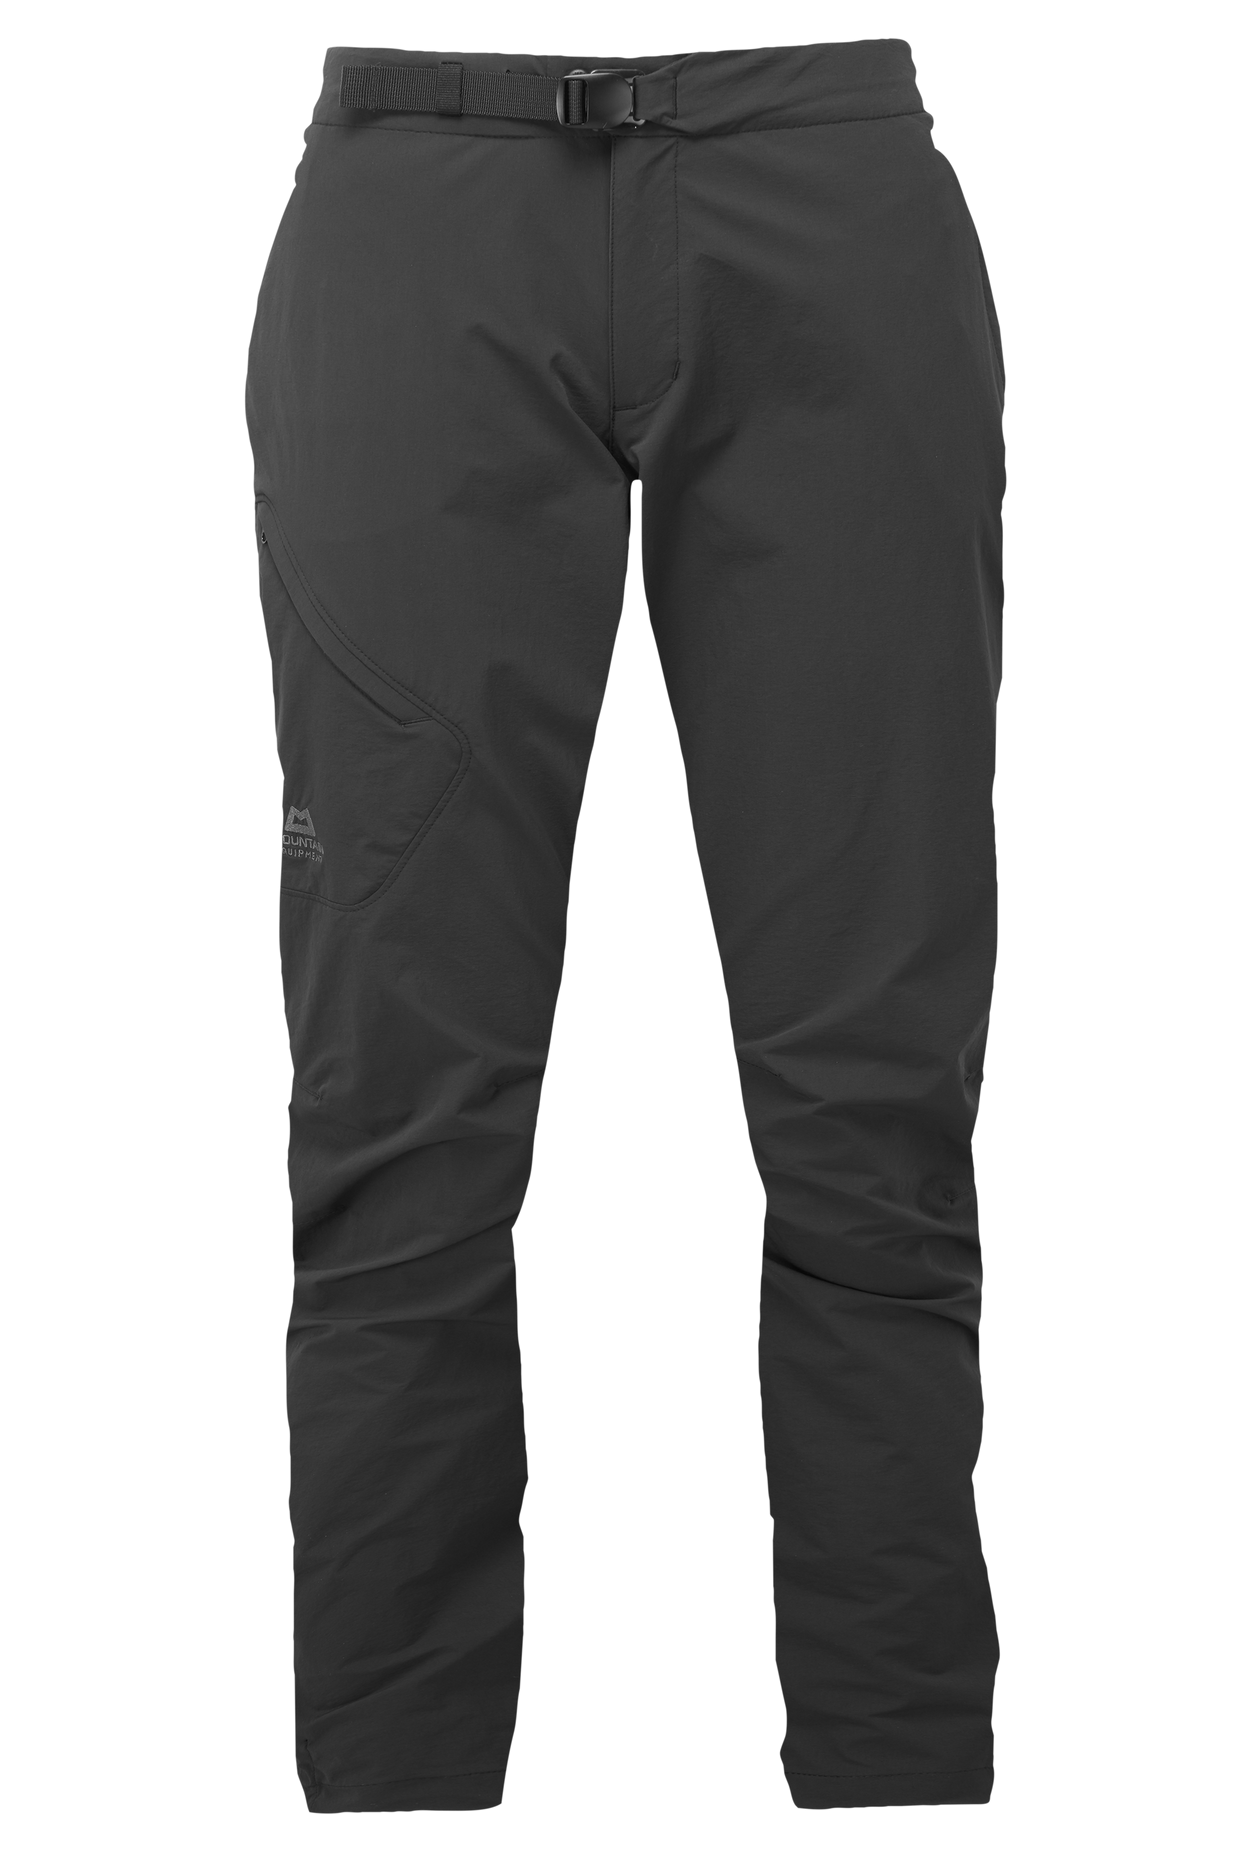 Mountain equipment dámské softshellové kalhoty Comici Wmns Pant - zkrácené Barva: black, Velikost: XS